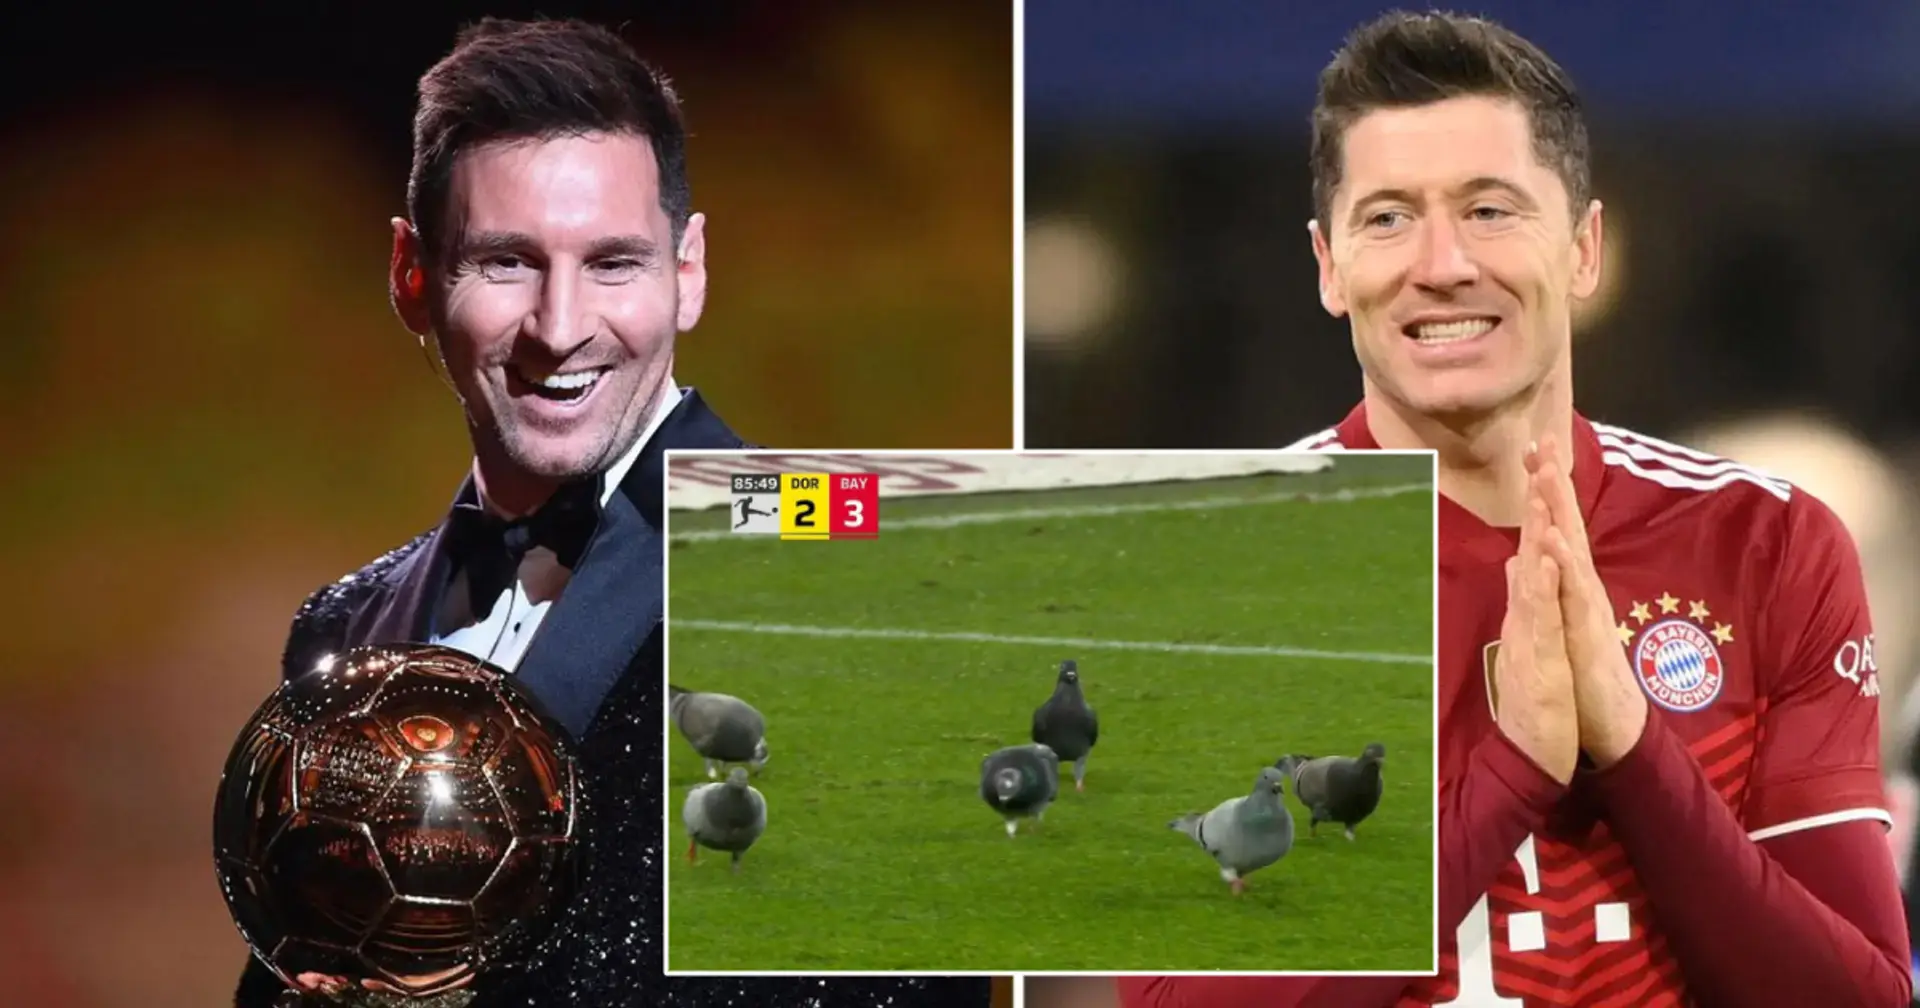 Dortmund fans hilariously troll Lewandowski as they chant Messi's name